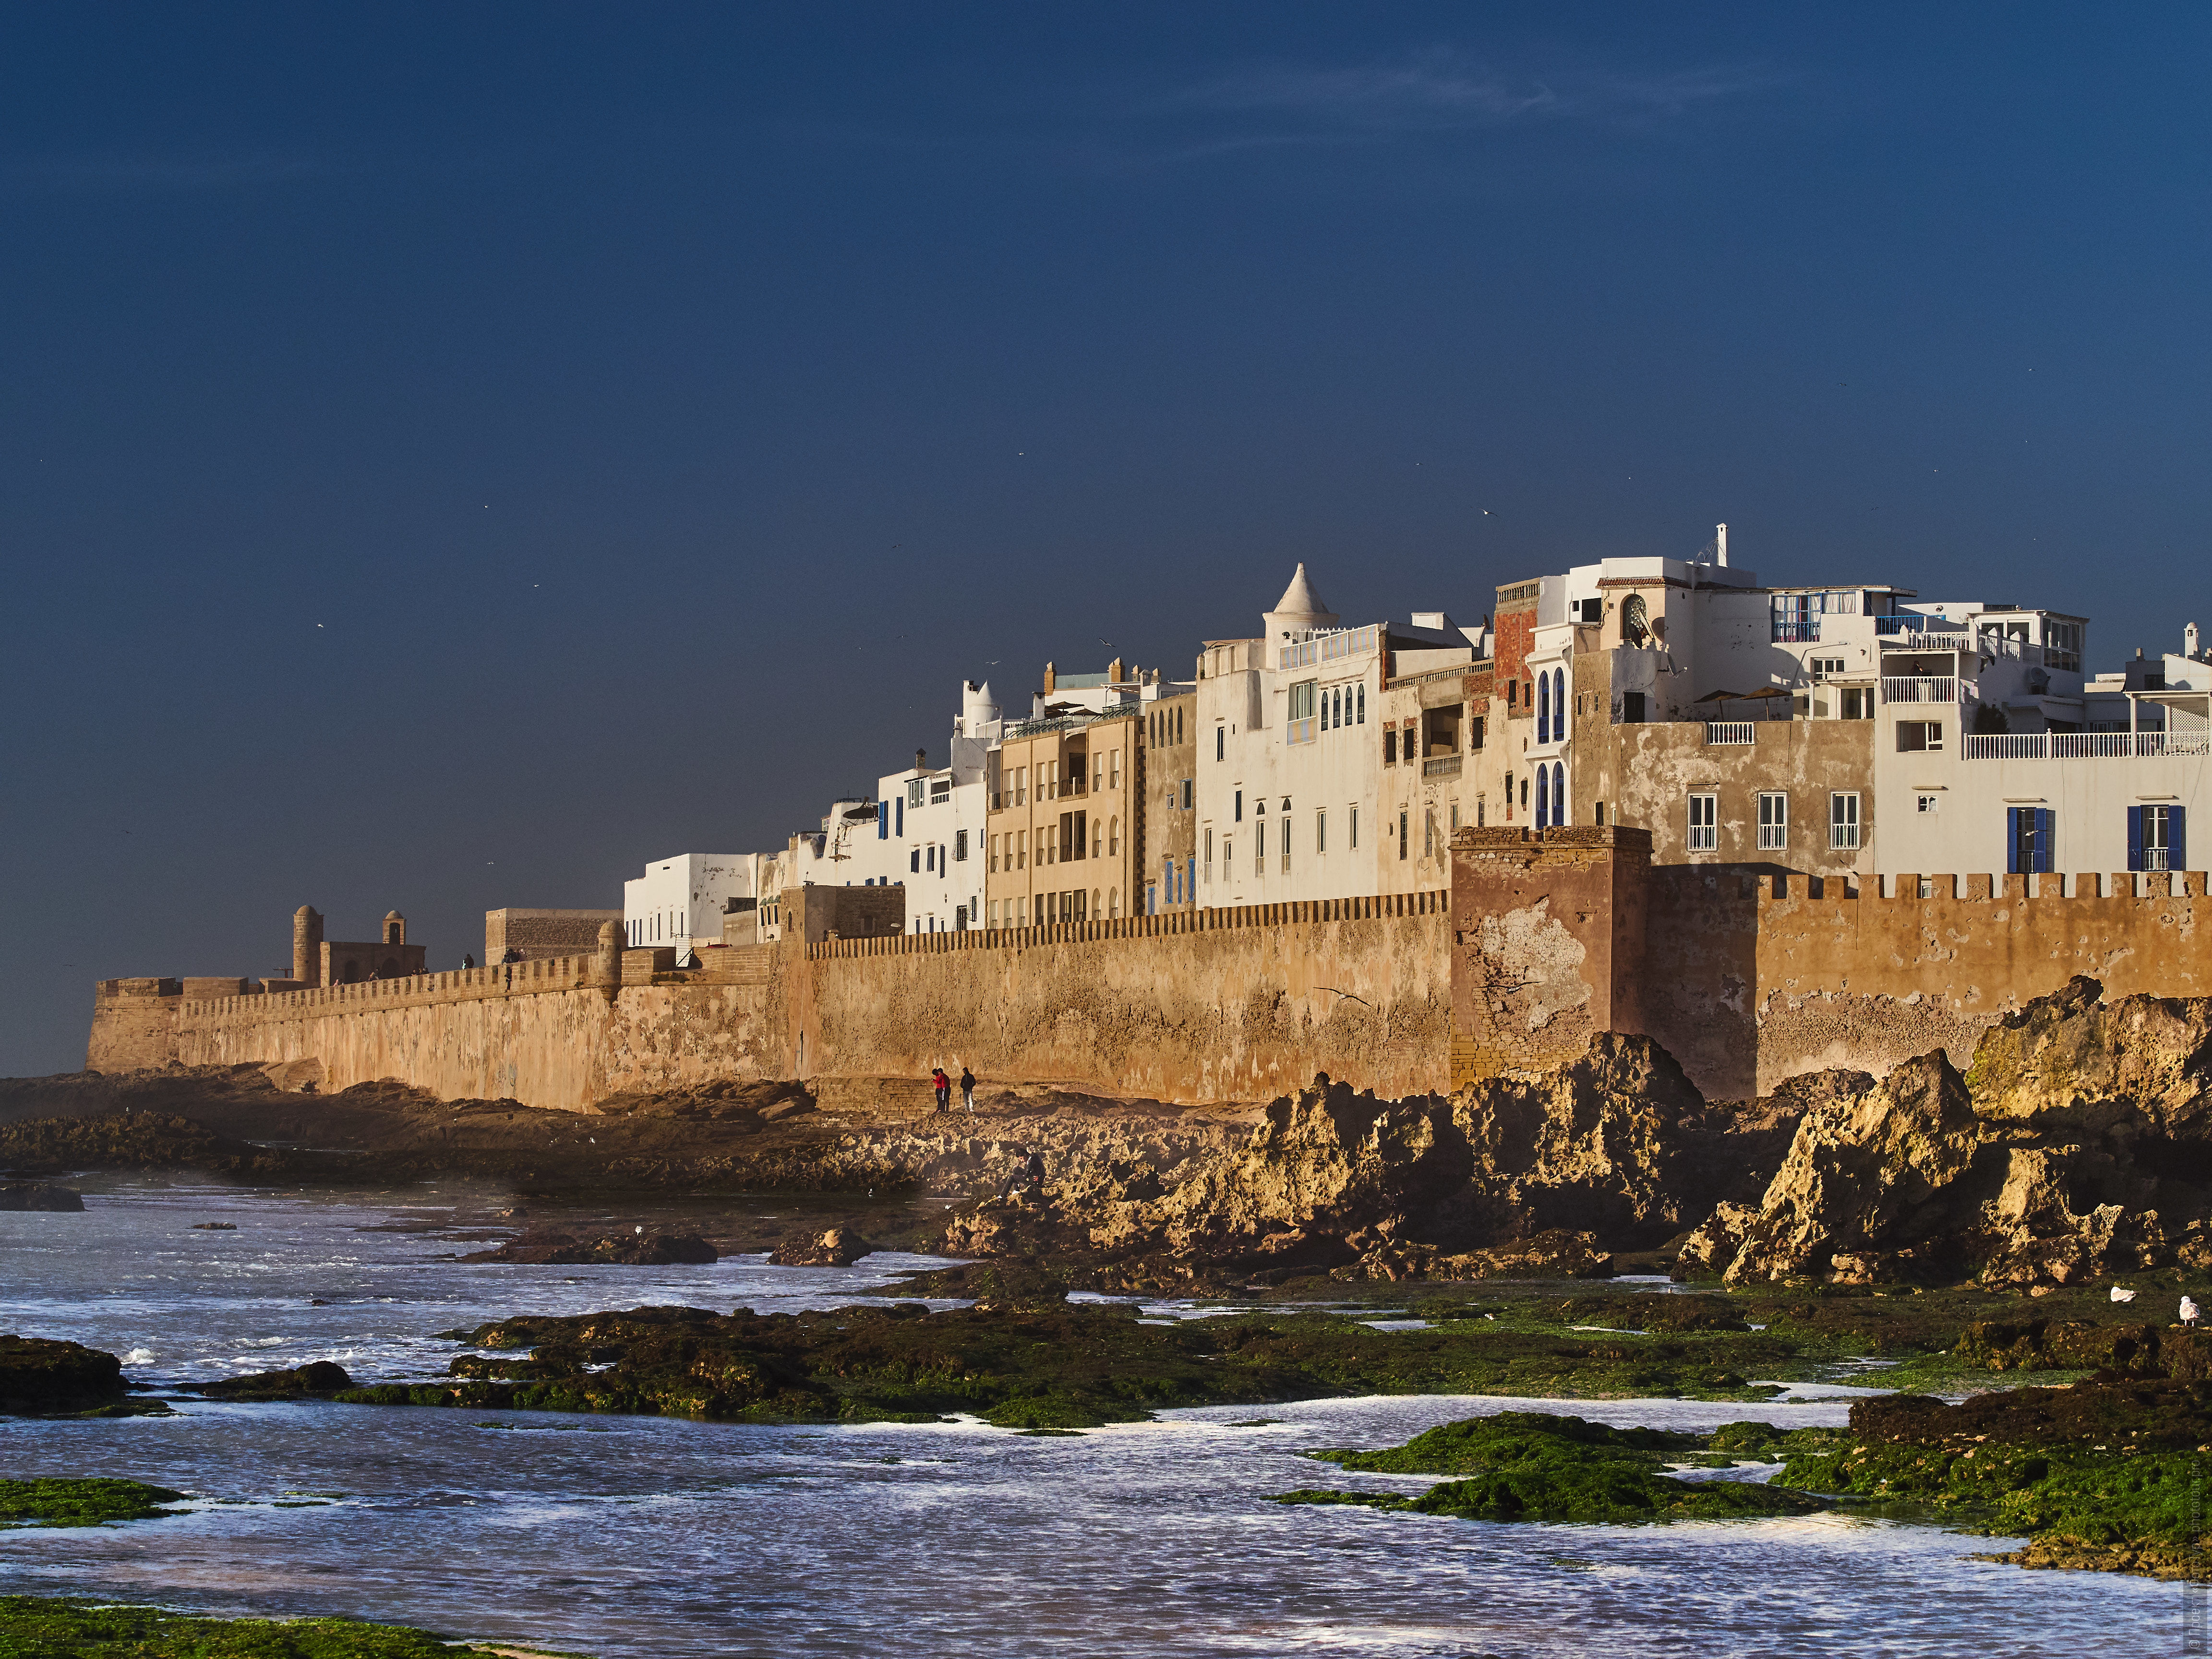 Fortress Port Essaouira. Adventure photo tour: medina, cascades, sands and ports of Morocco, April 4 - 17, 2020.